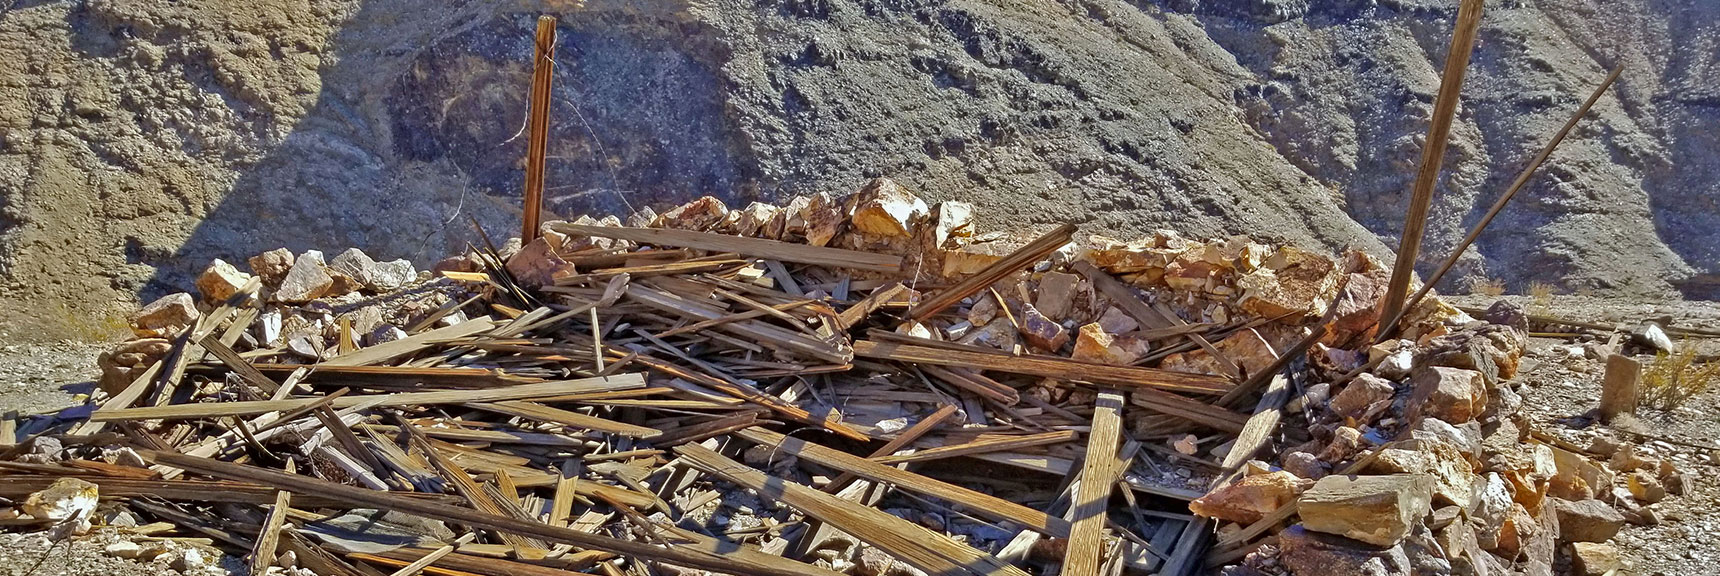 Collapsed Upper Mine Camp Building | Keane Wonder Mine | Death Valley National Park, California